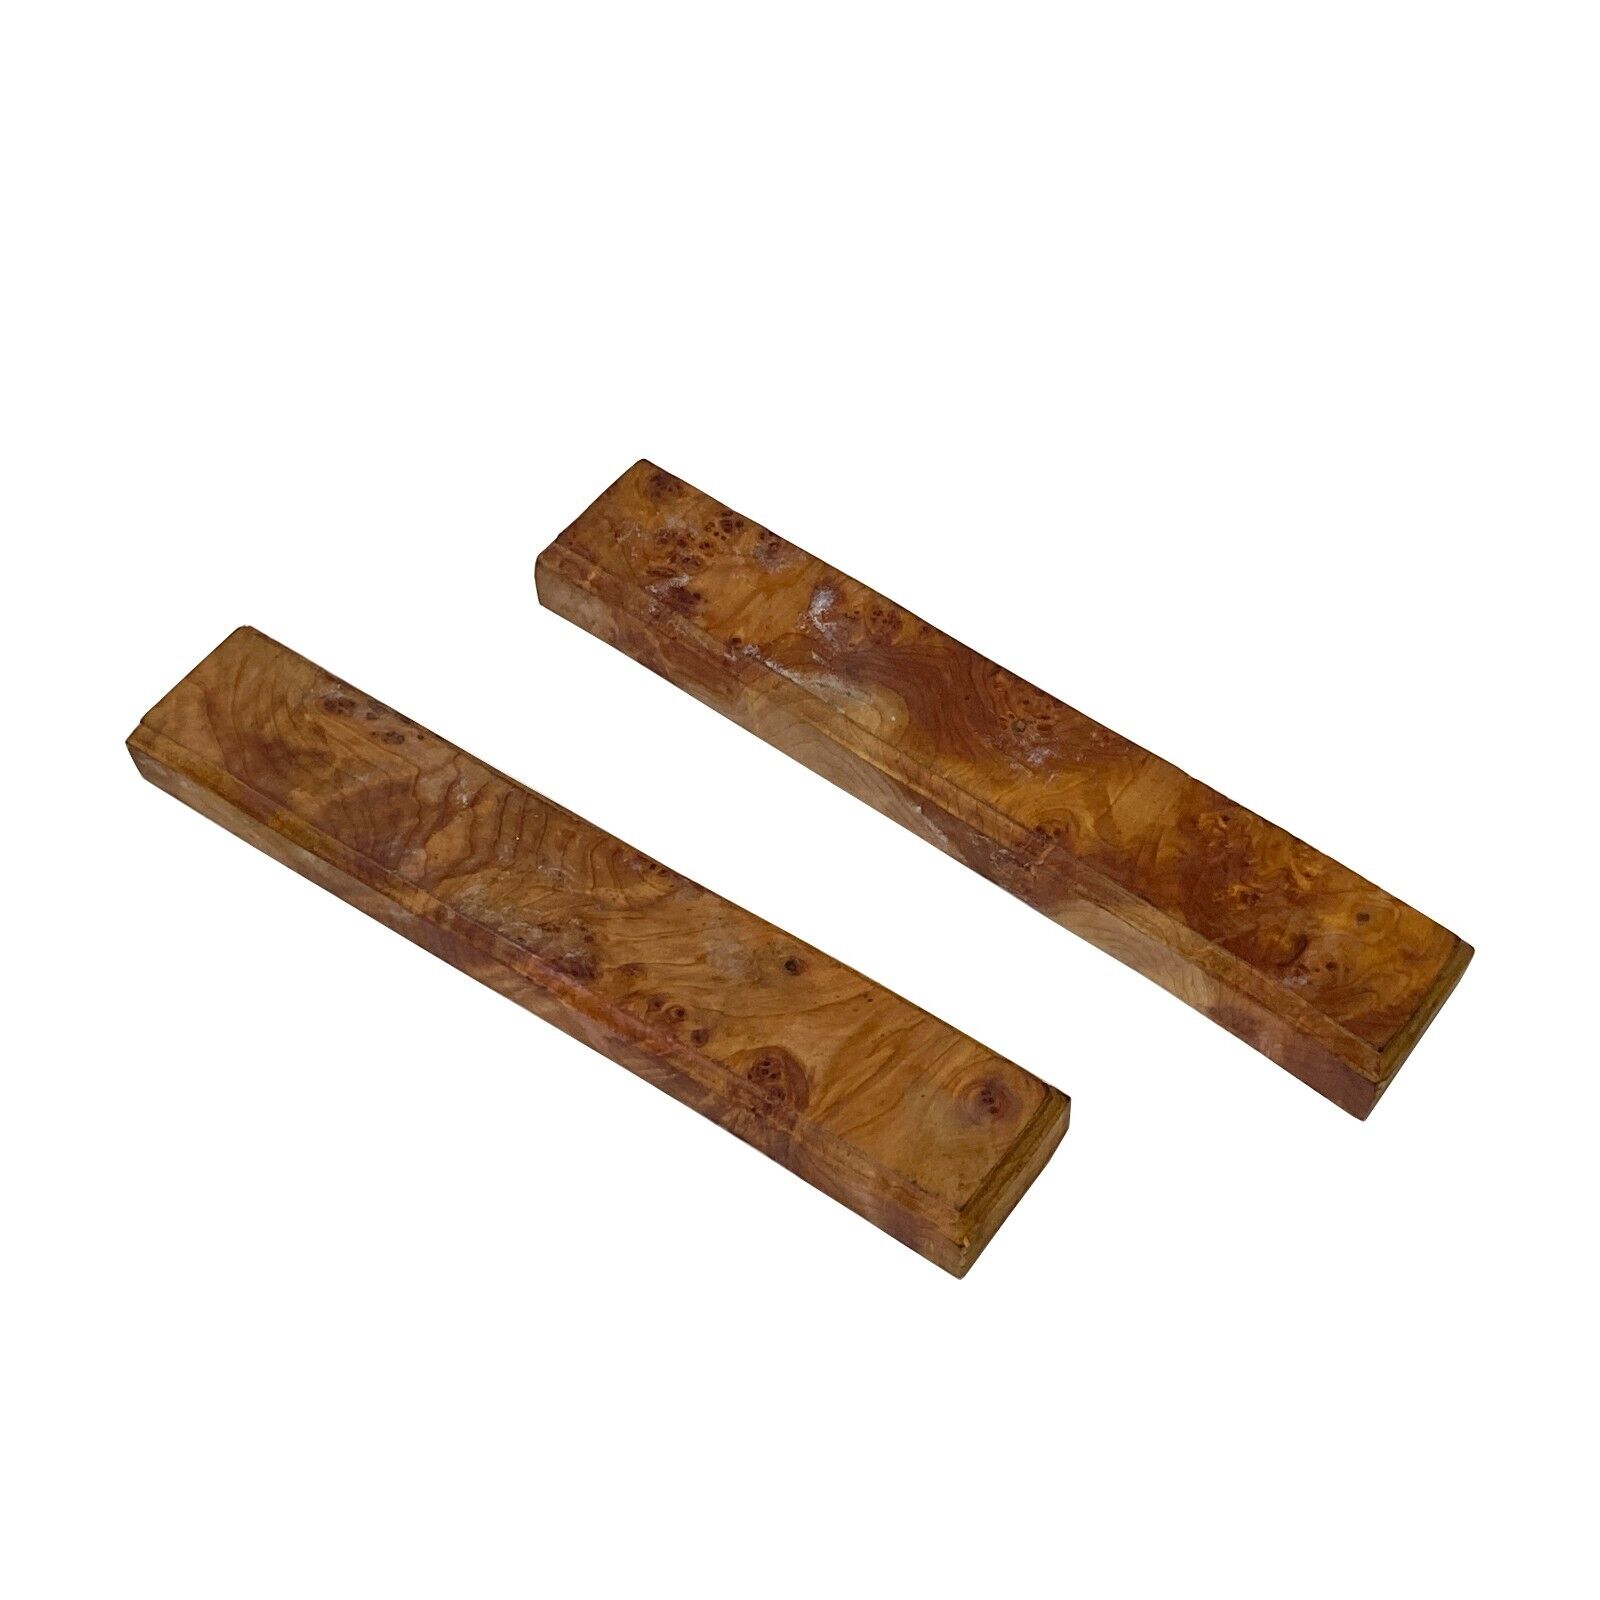 Chinese Pair Natural Wood Grain Patina Rectangular Paperweights ws2771